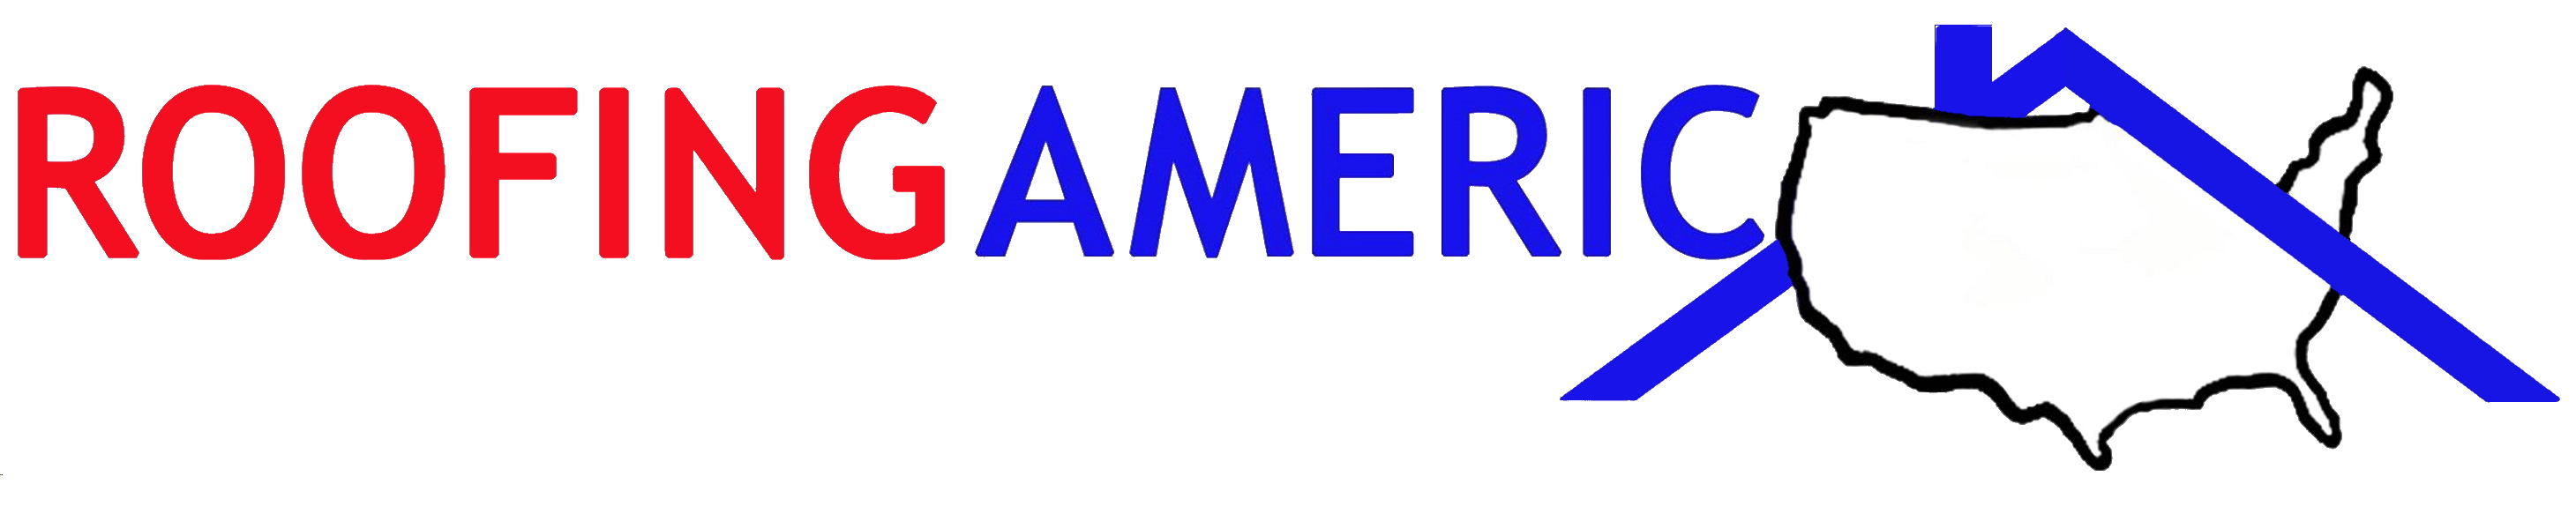 Roofing America Logo